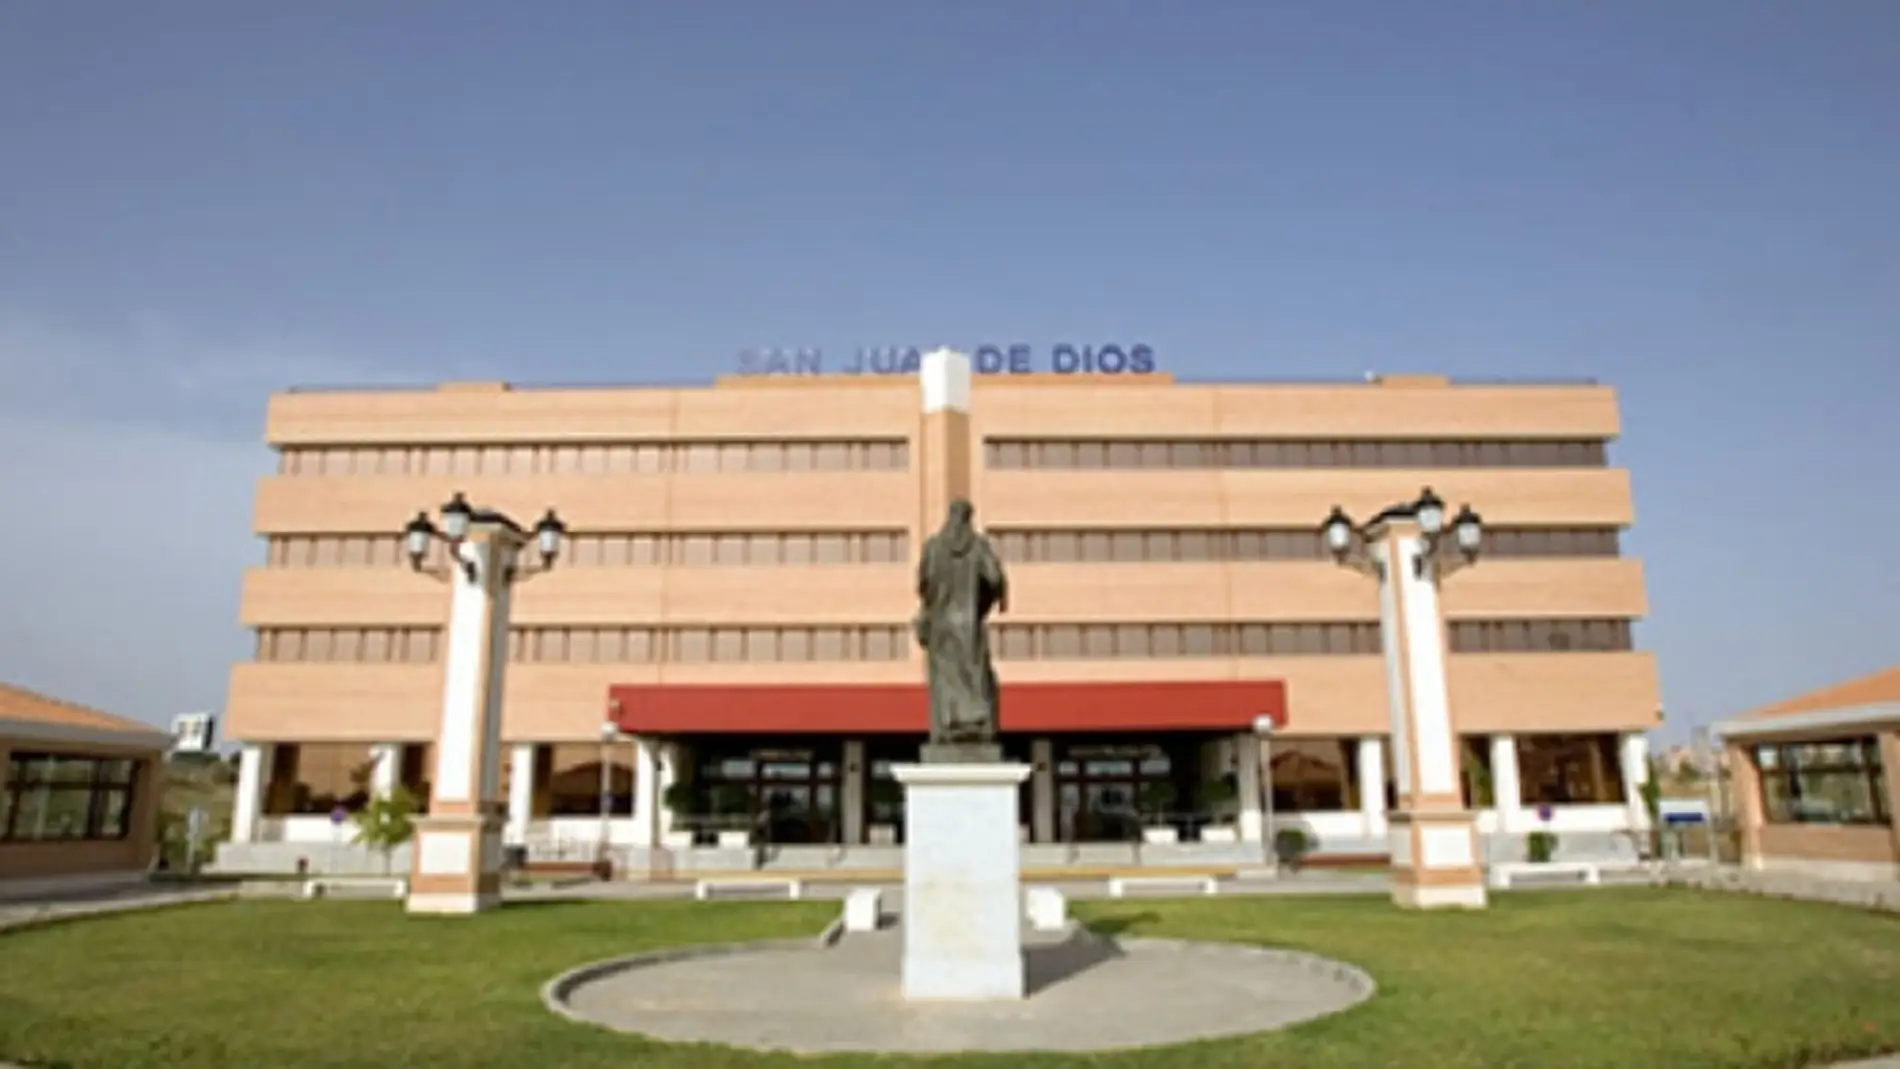 Trabajadores del hospital San Juan de Dios de Bormujos anuncian tres jornadas de huelga